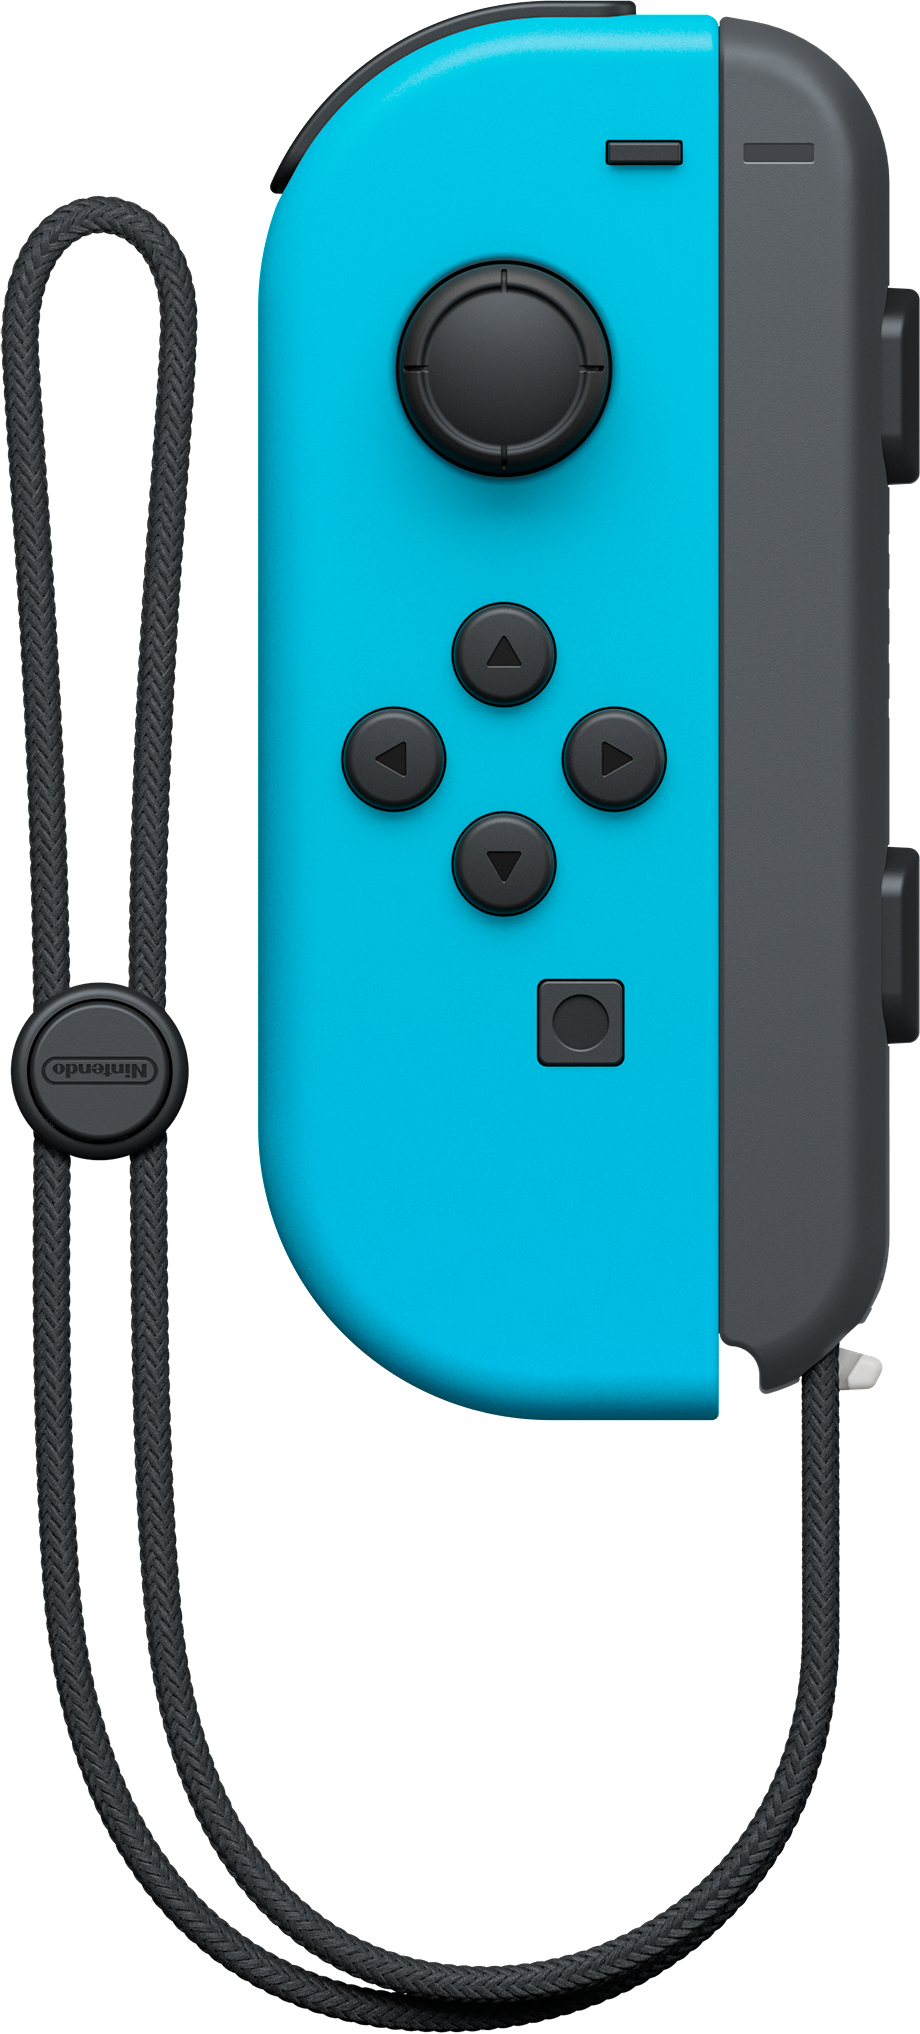 NINTENDO Nintendo Switch Neonblau Nintendo (L) Controller für Joy-Con Switch